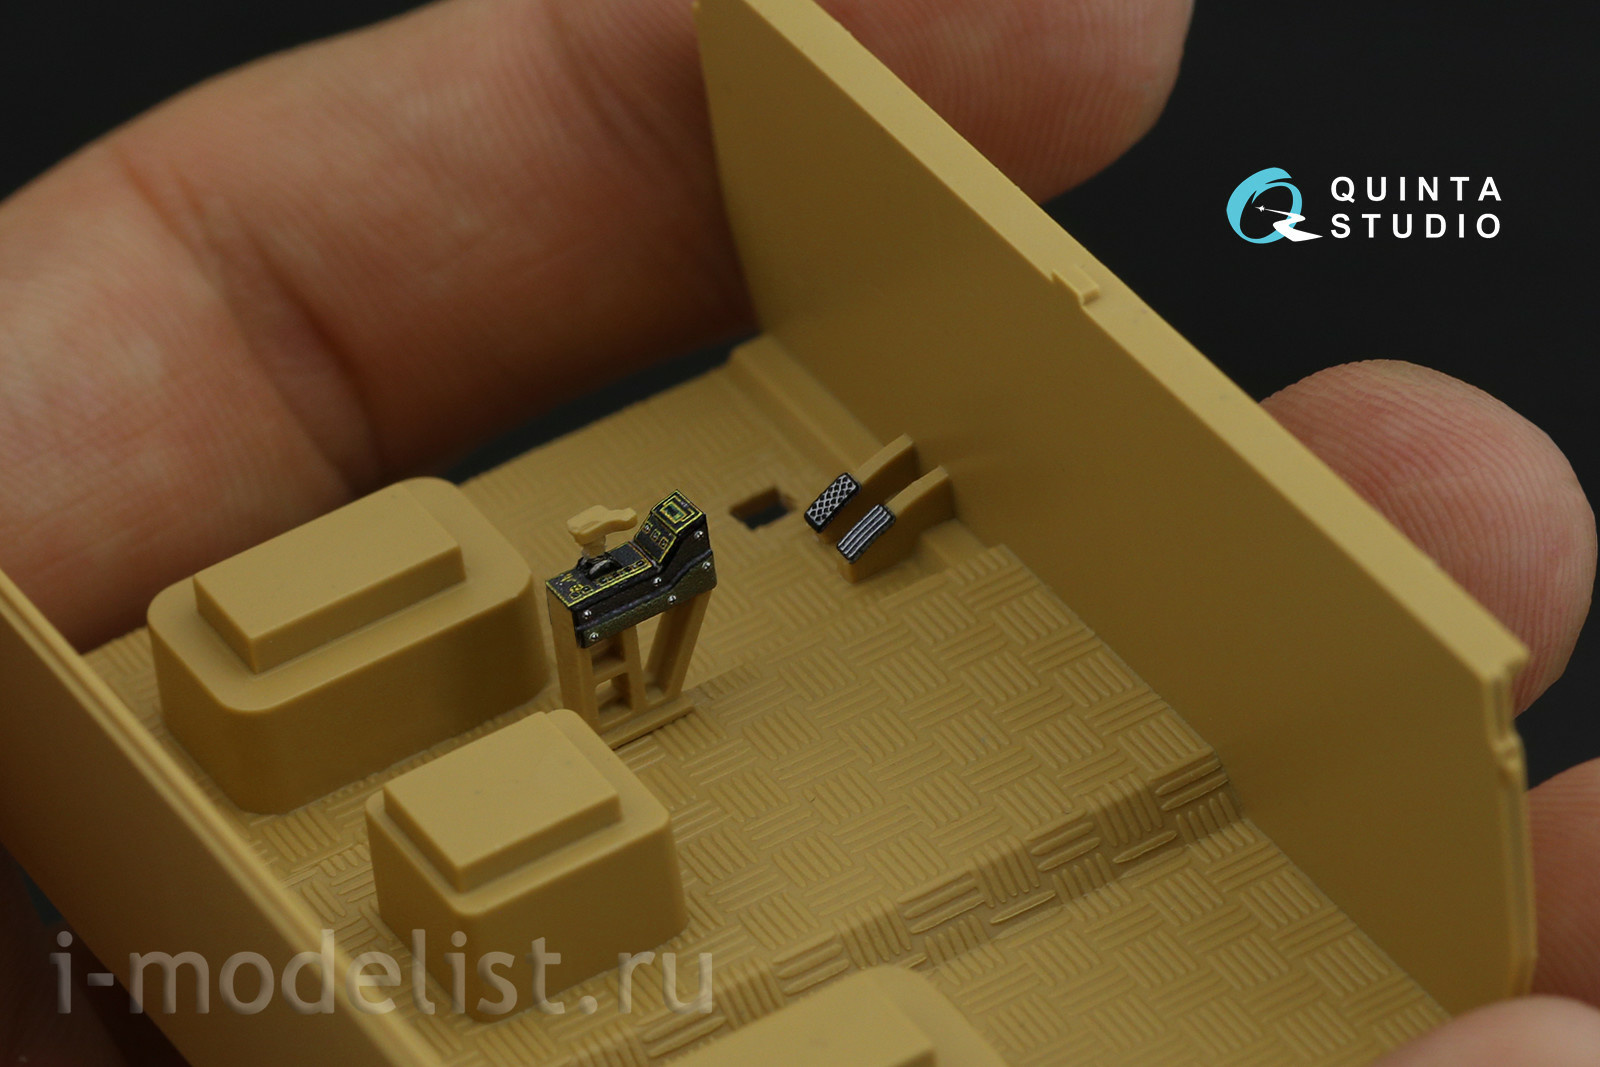 QD35026 Quinta Studio 1/35 3D decal of TYPHOON-U armored car cabin interior